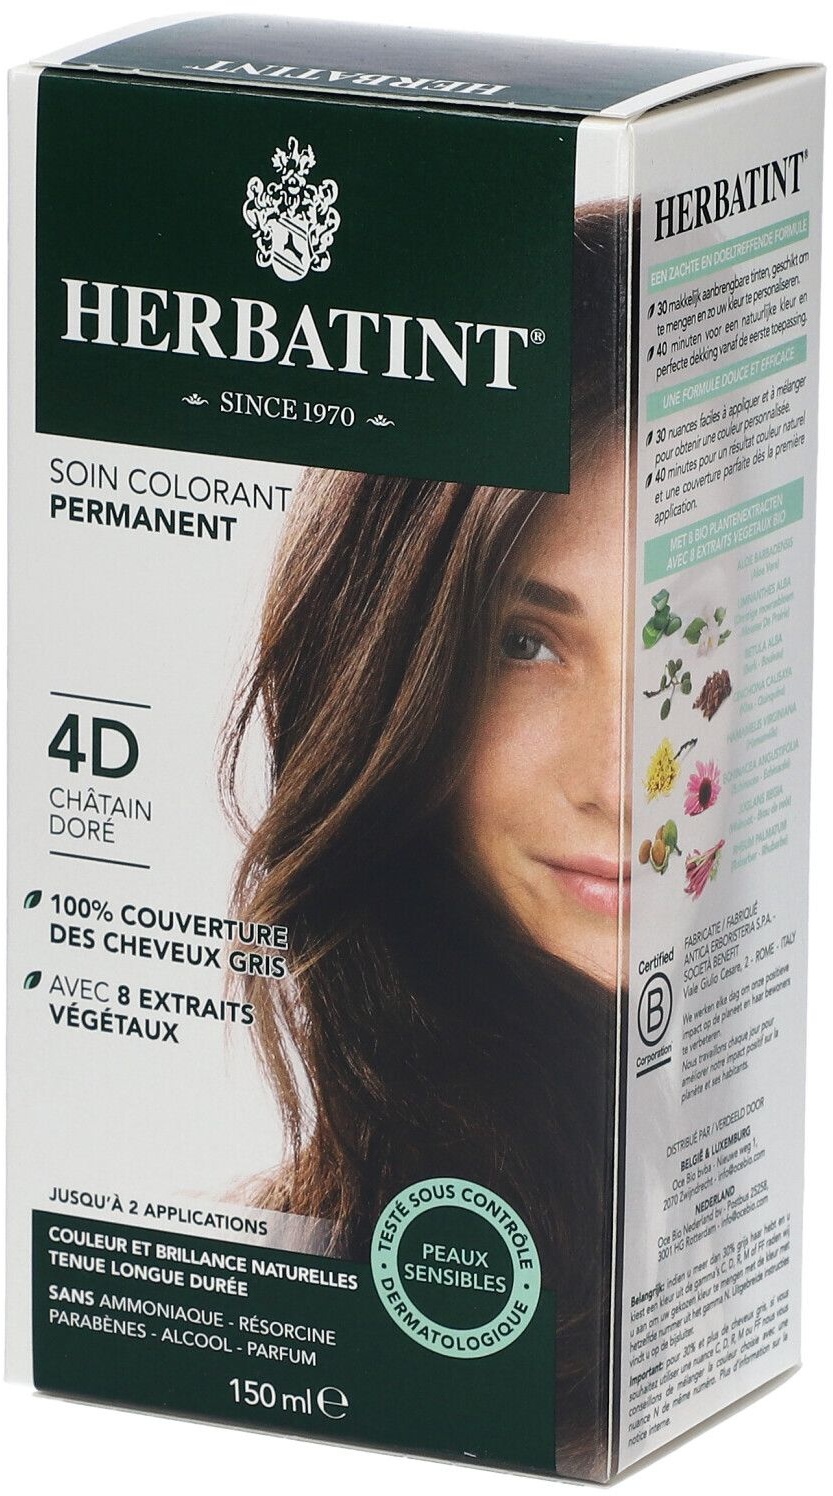 Herbatint® 4D golden Kastanienbraun golden Blond permanent Haar Coloration